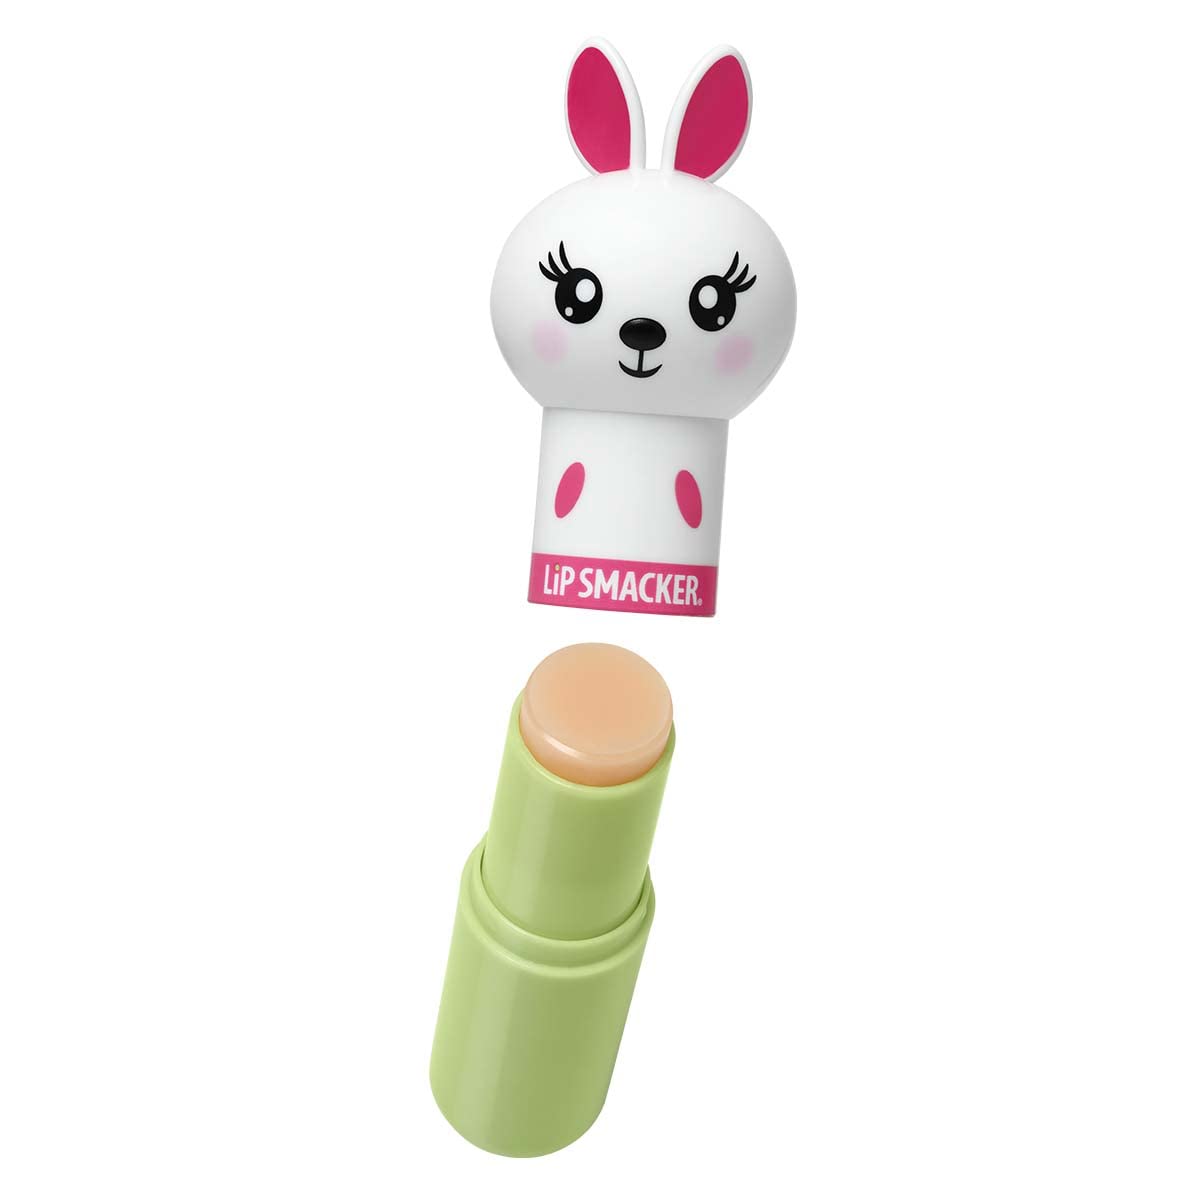 Lip Smacker Lippy Pals Bunny Rabbit, Flavored Moisturizing & Smoothing Soft Shine Lip Balm, Hydrating & Protecting Fun Tasty Flavors, Cruelty-Free & Vegan - Hoppy Carrot Cake : Beauty & Personal Care